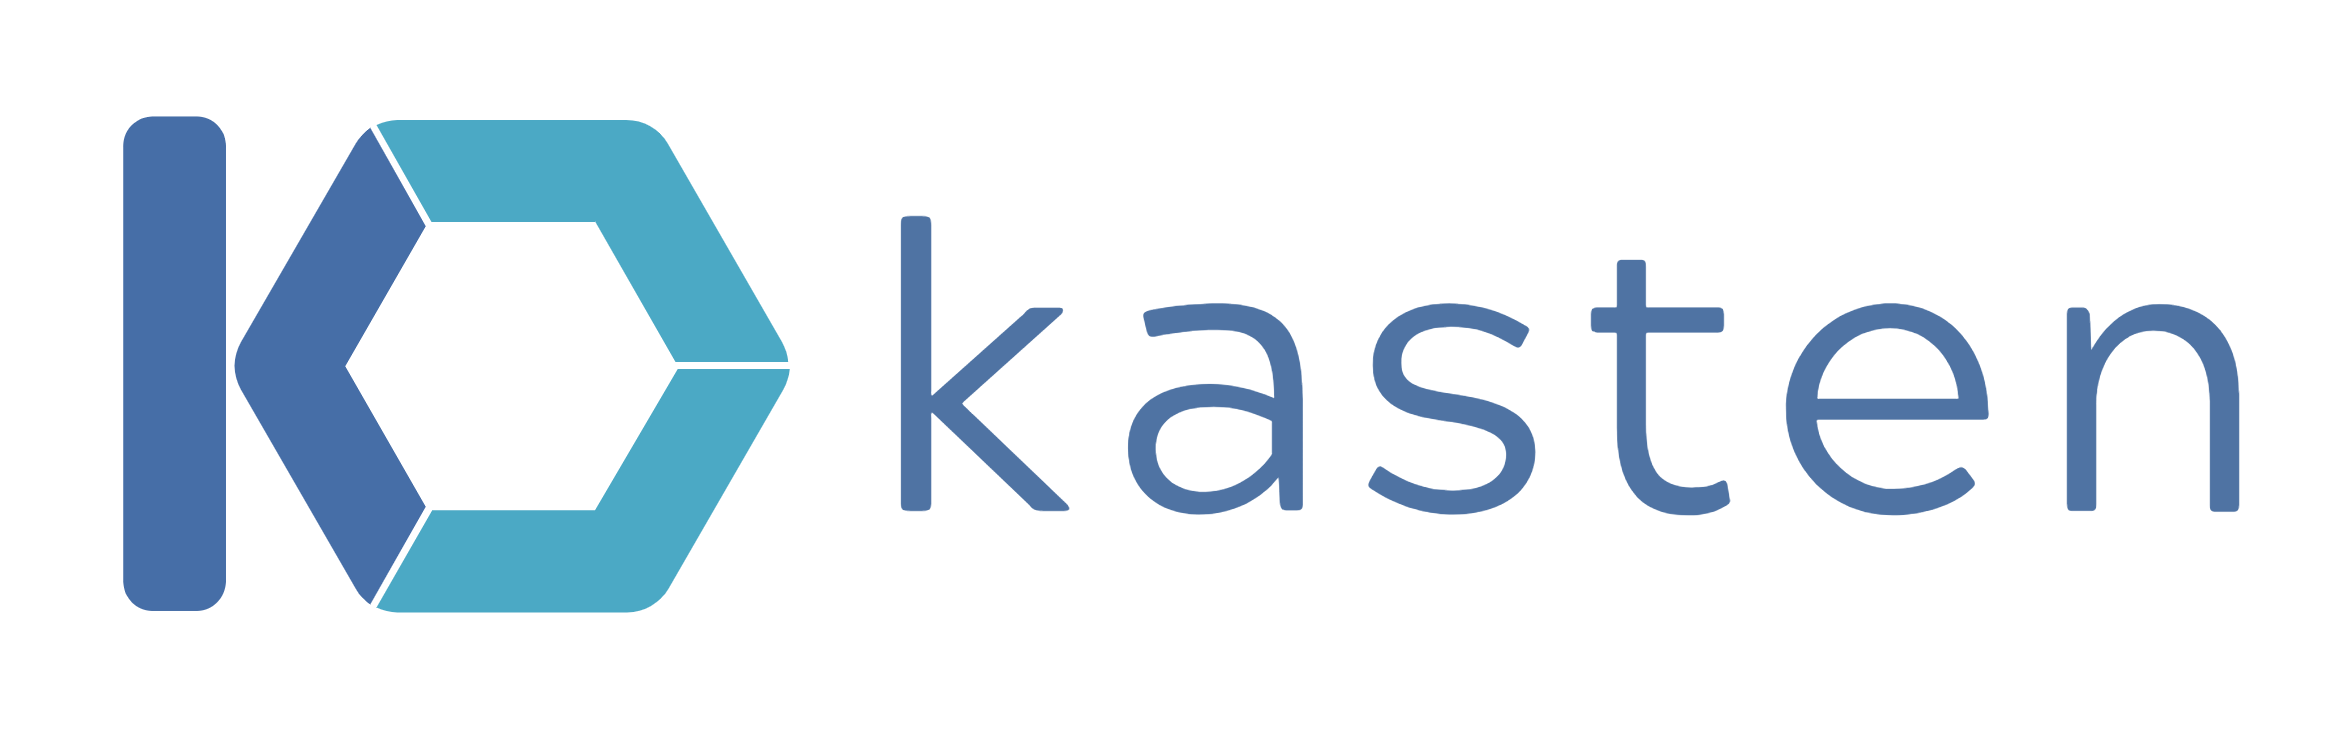 Kasten Logo In Line